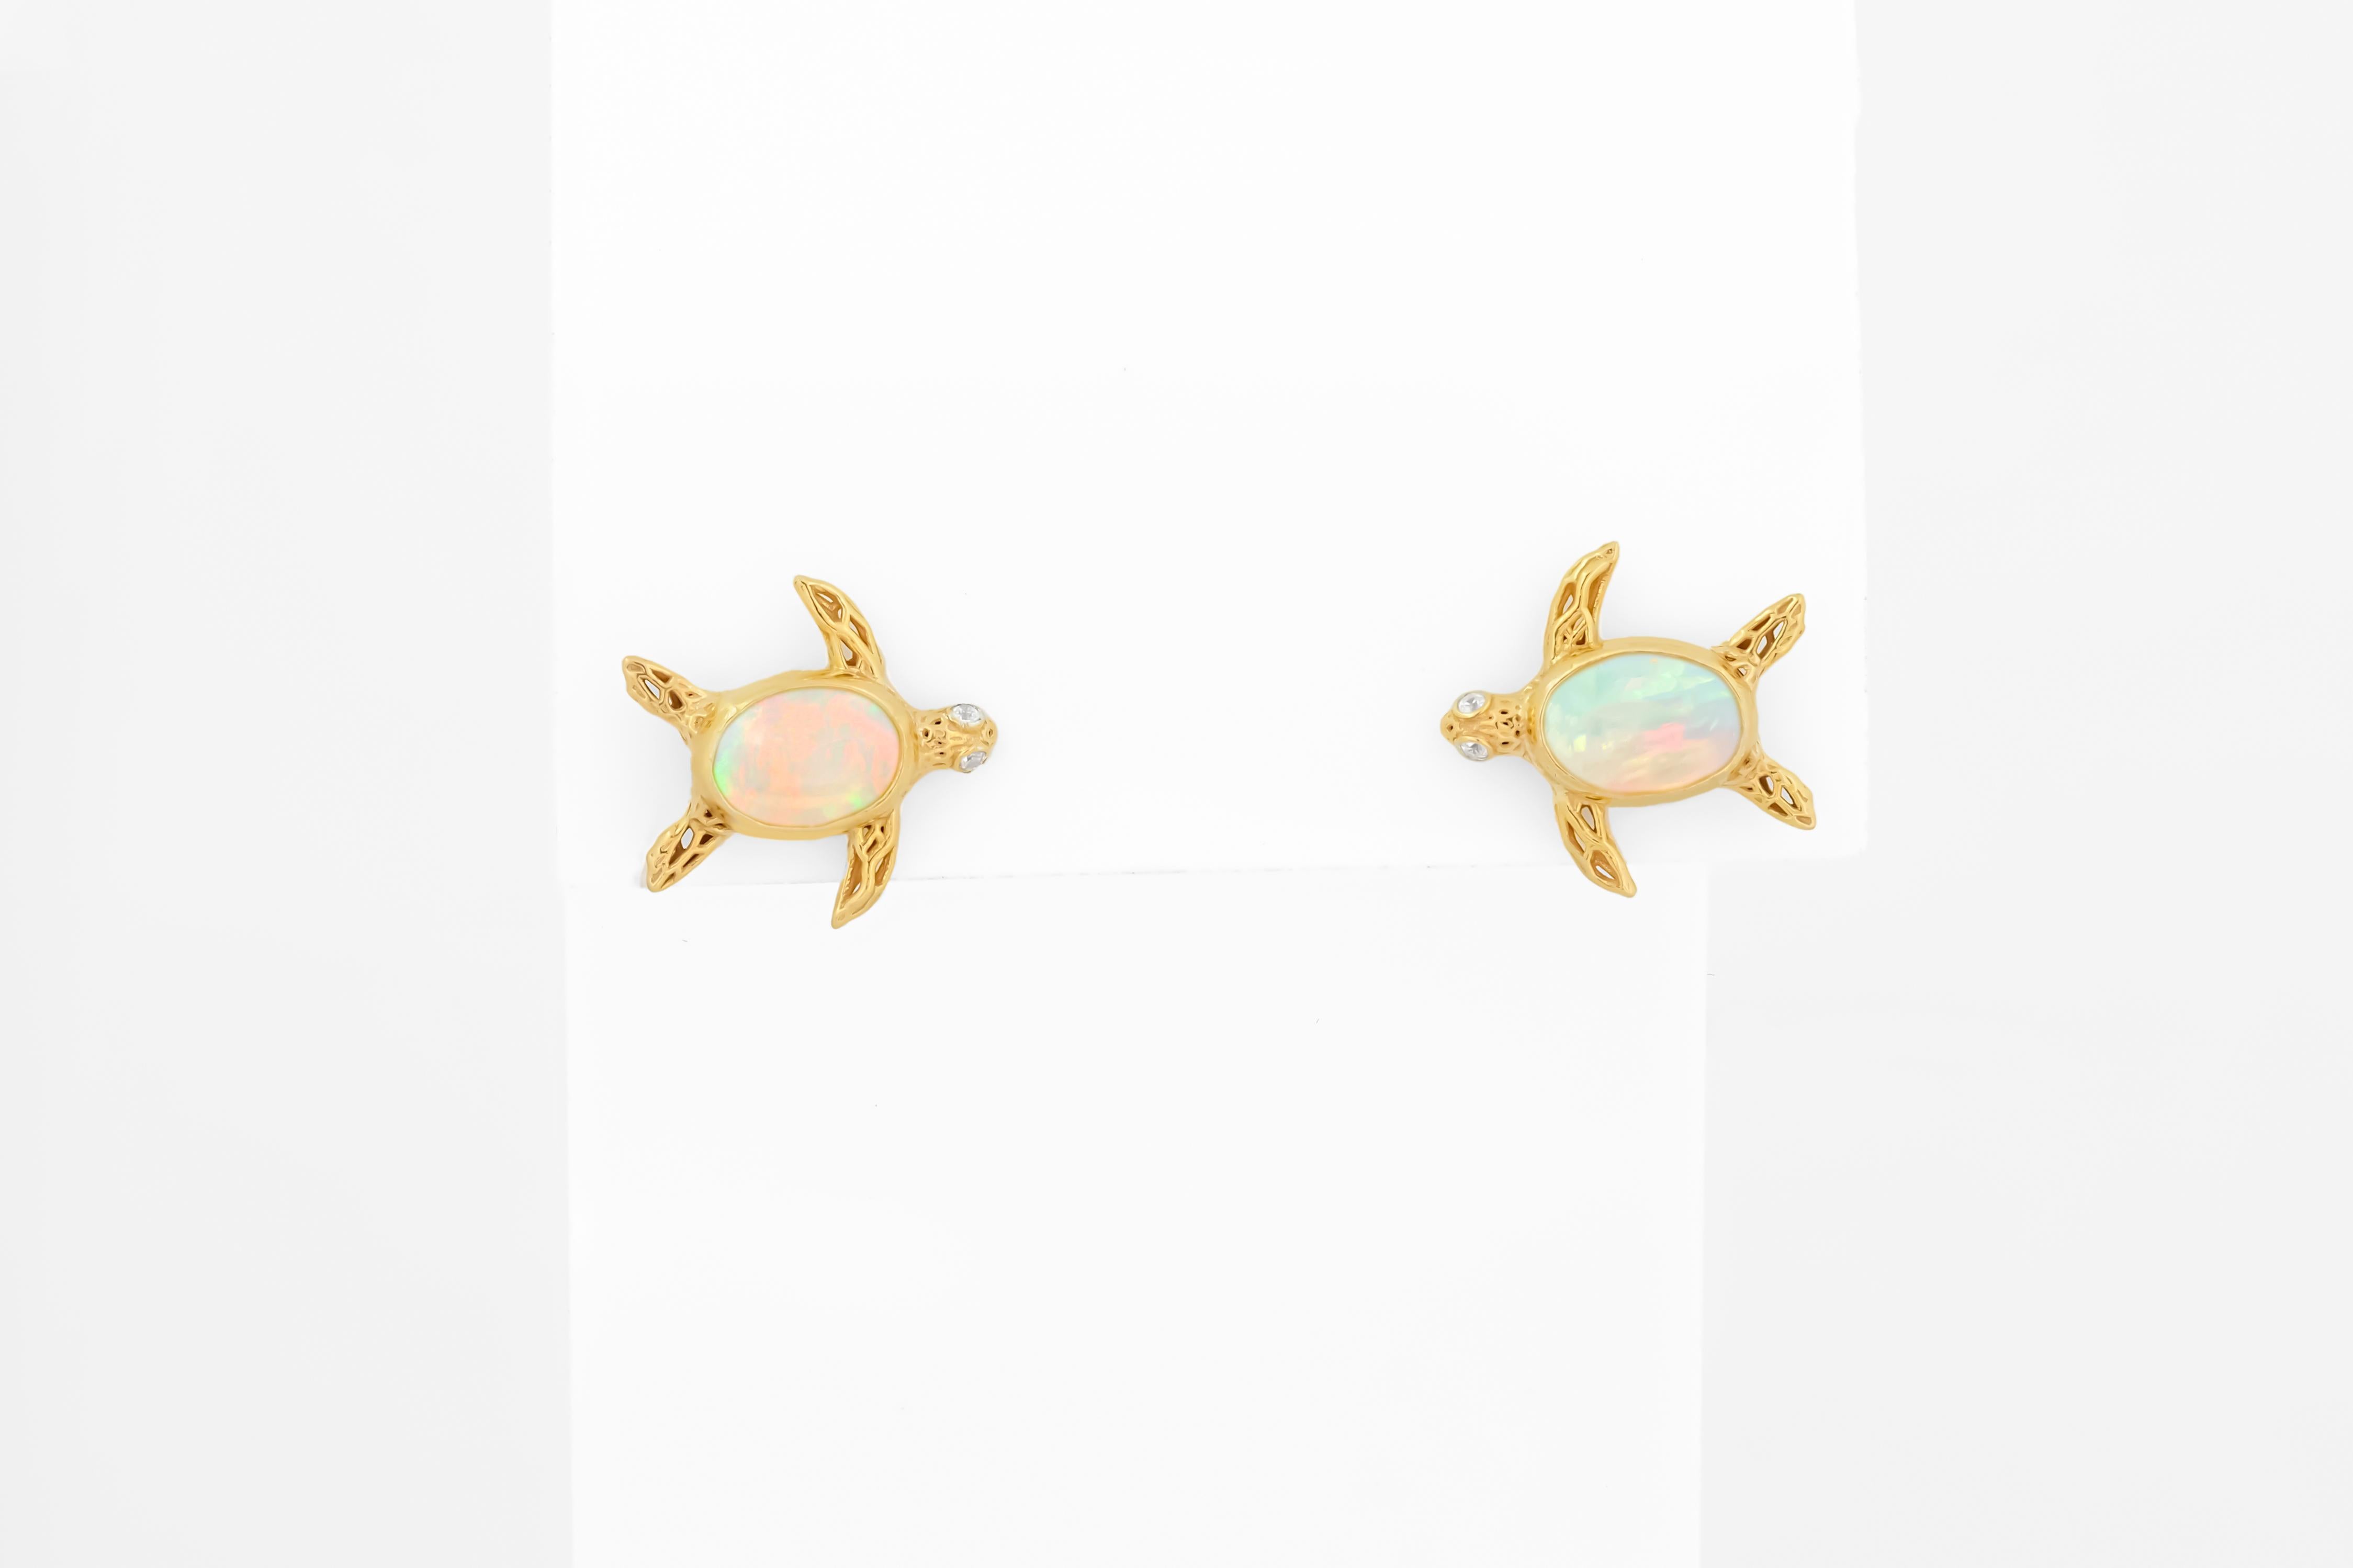 Women's Turtle earrings studs with opals in 14k gold.